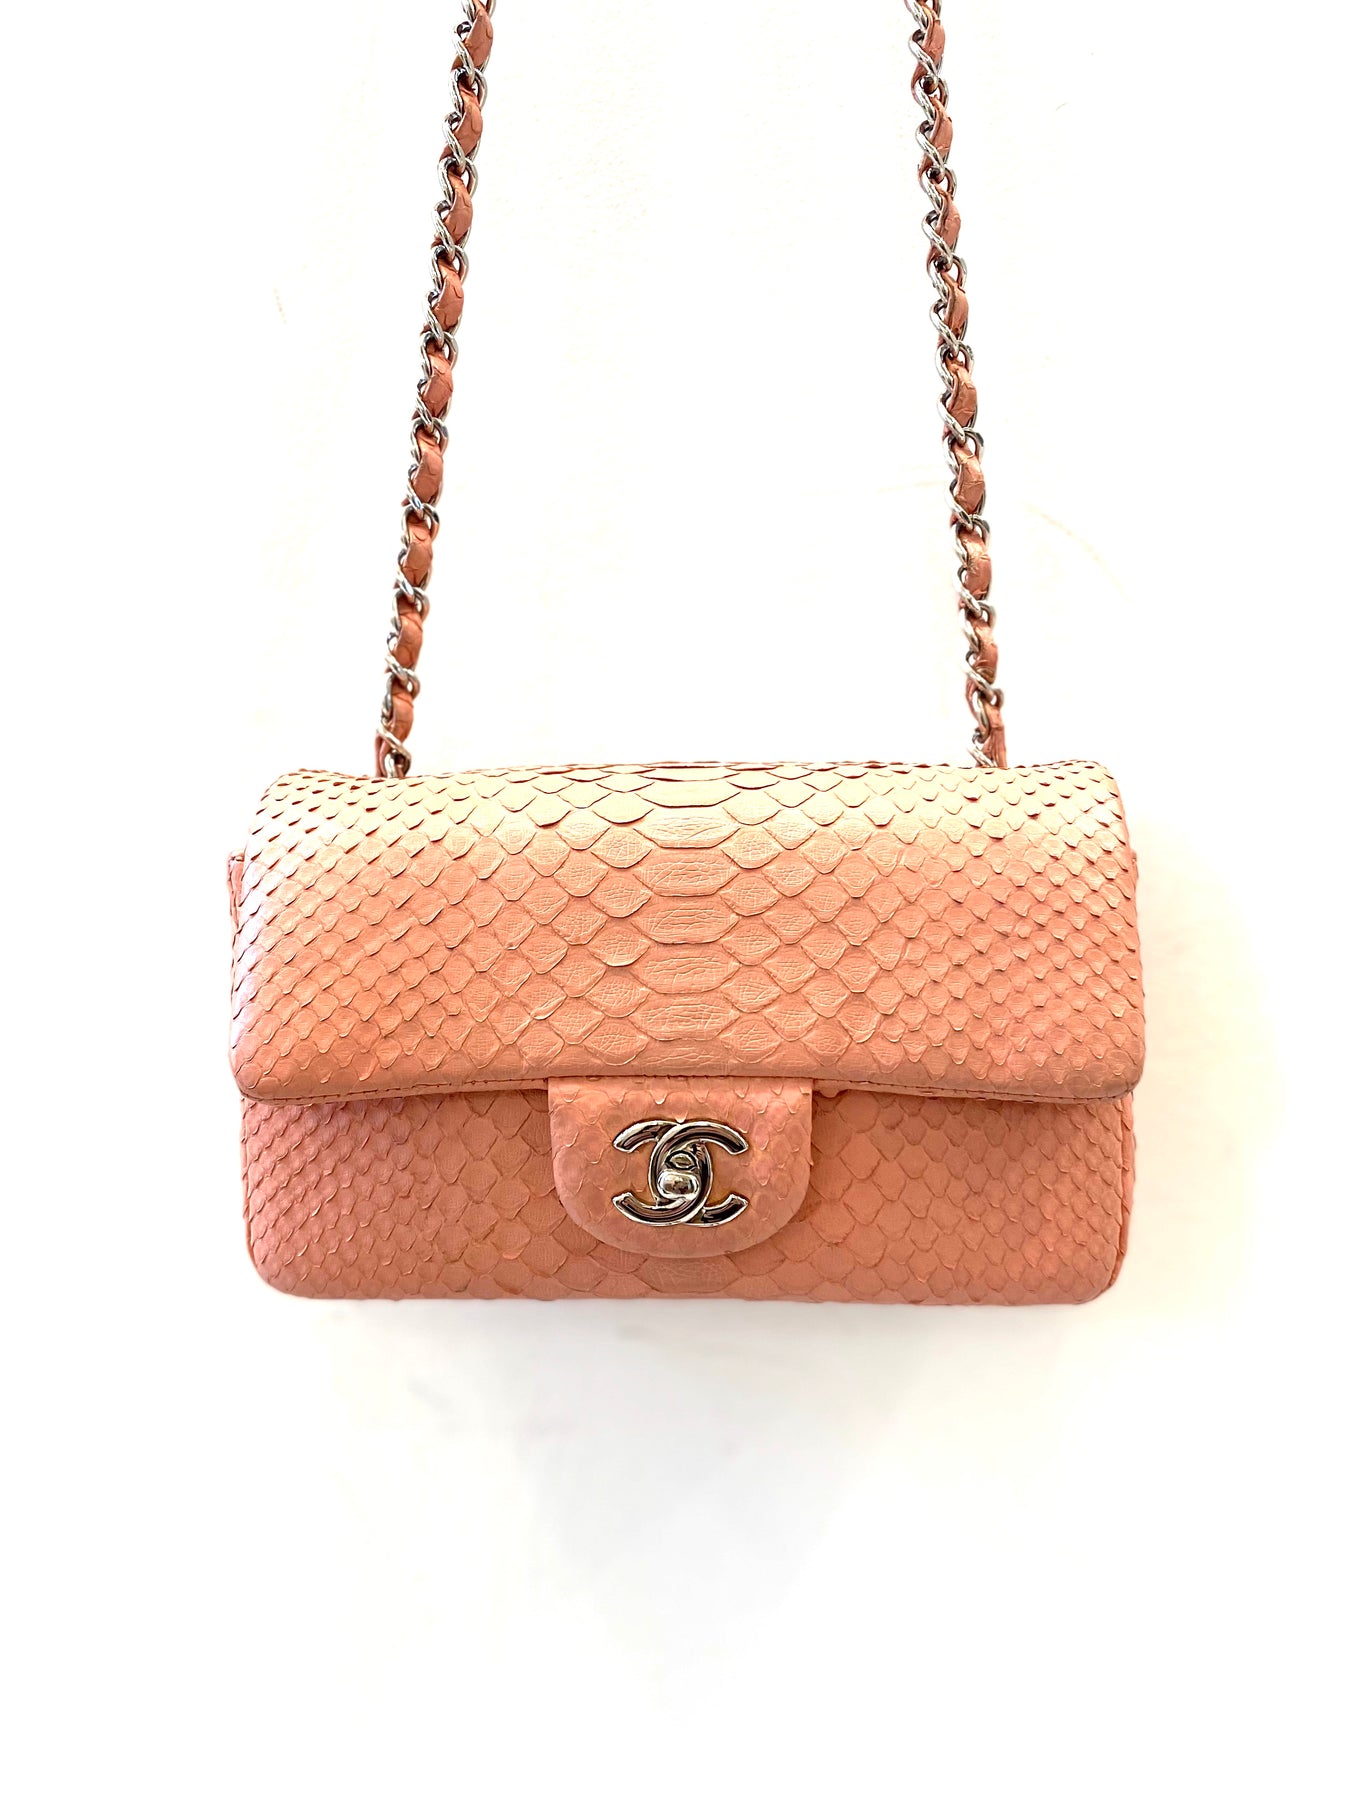 ❌NFS ATM: FULL SET Chanel caviar mini/small rectangular flap bubblegum pink